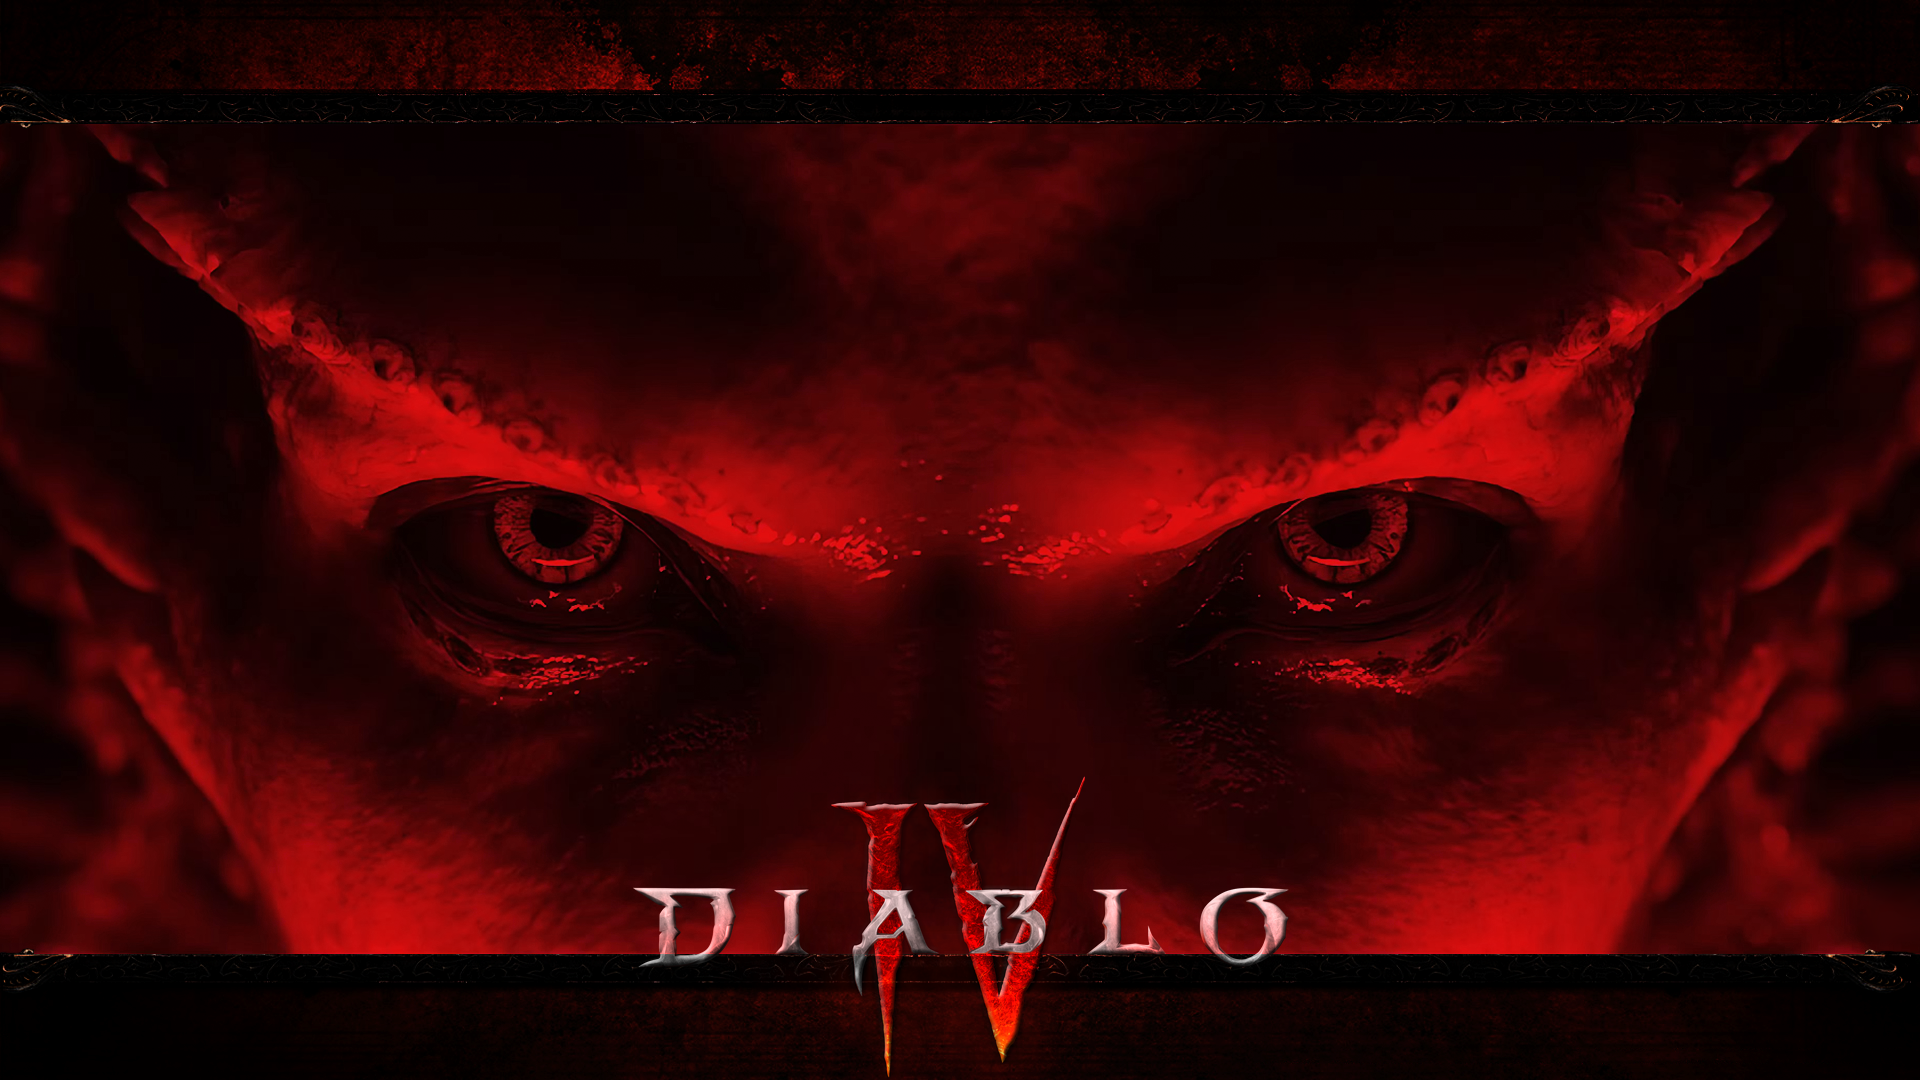 Diablo IV Wallpaper, The Creator of Sanctuary